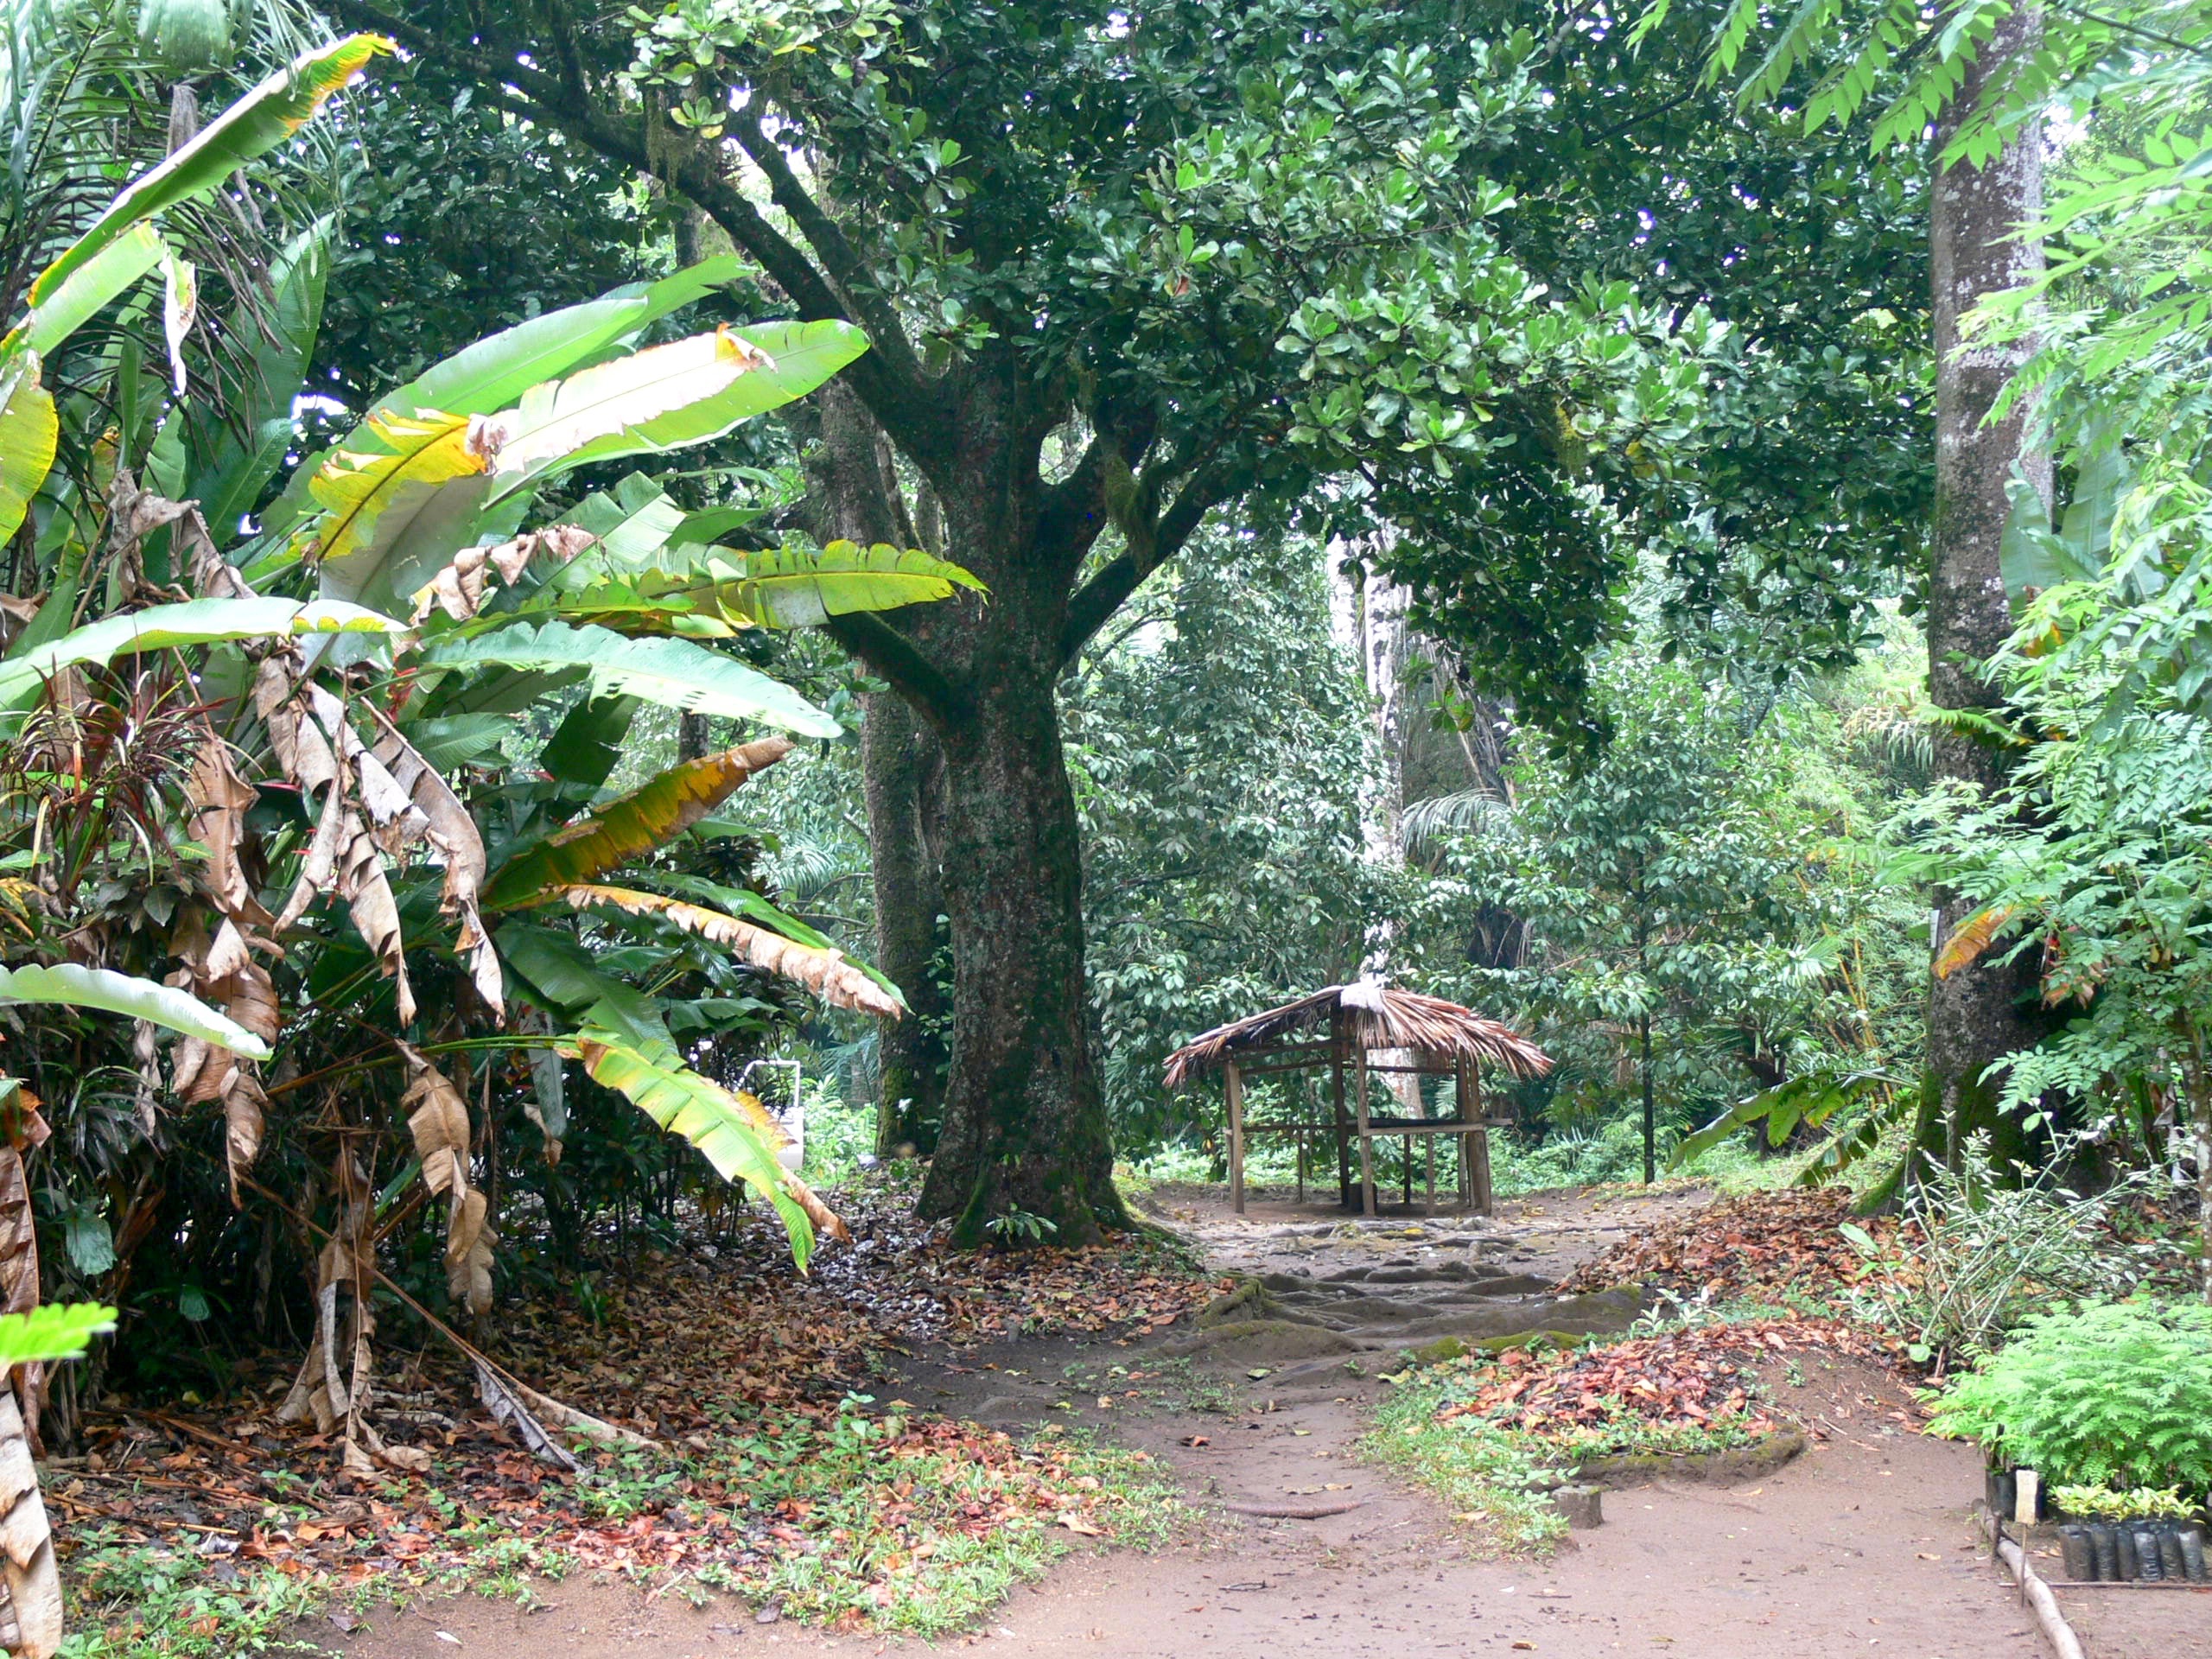 Amani Nature Reserve